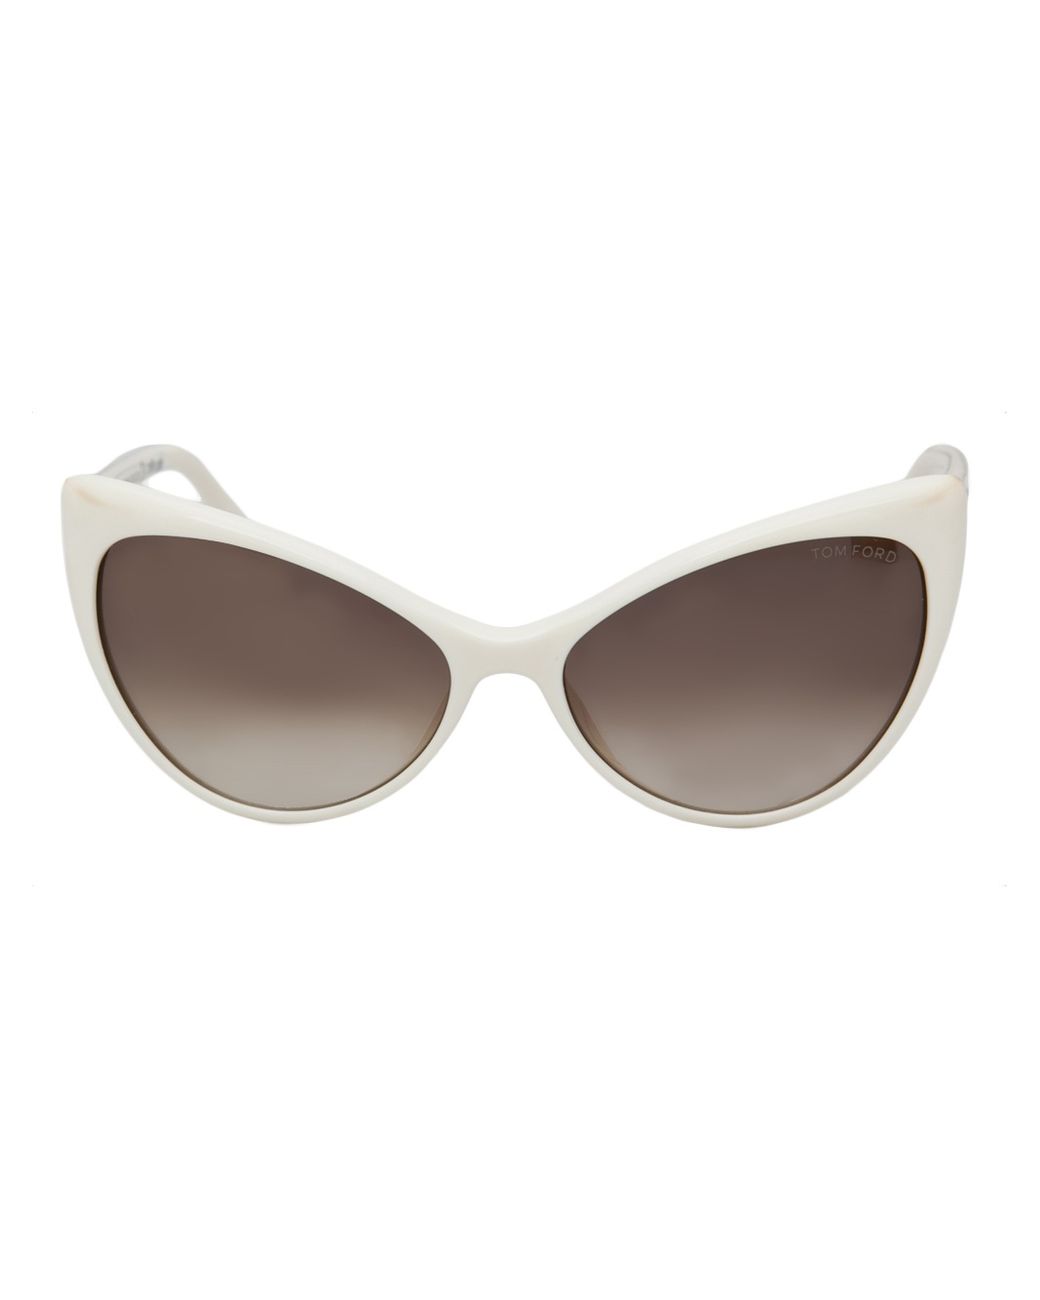 Tom Ford Nikita Sunglasses in White | Lyst